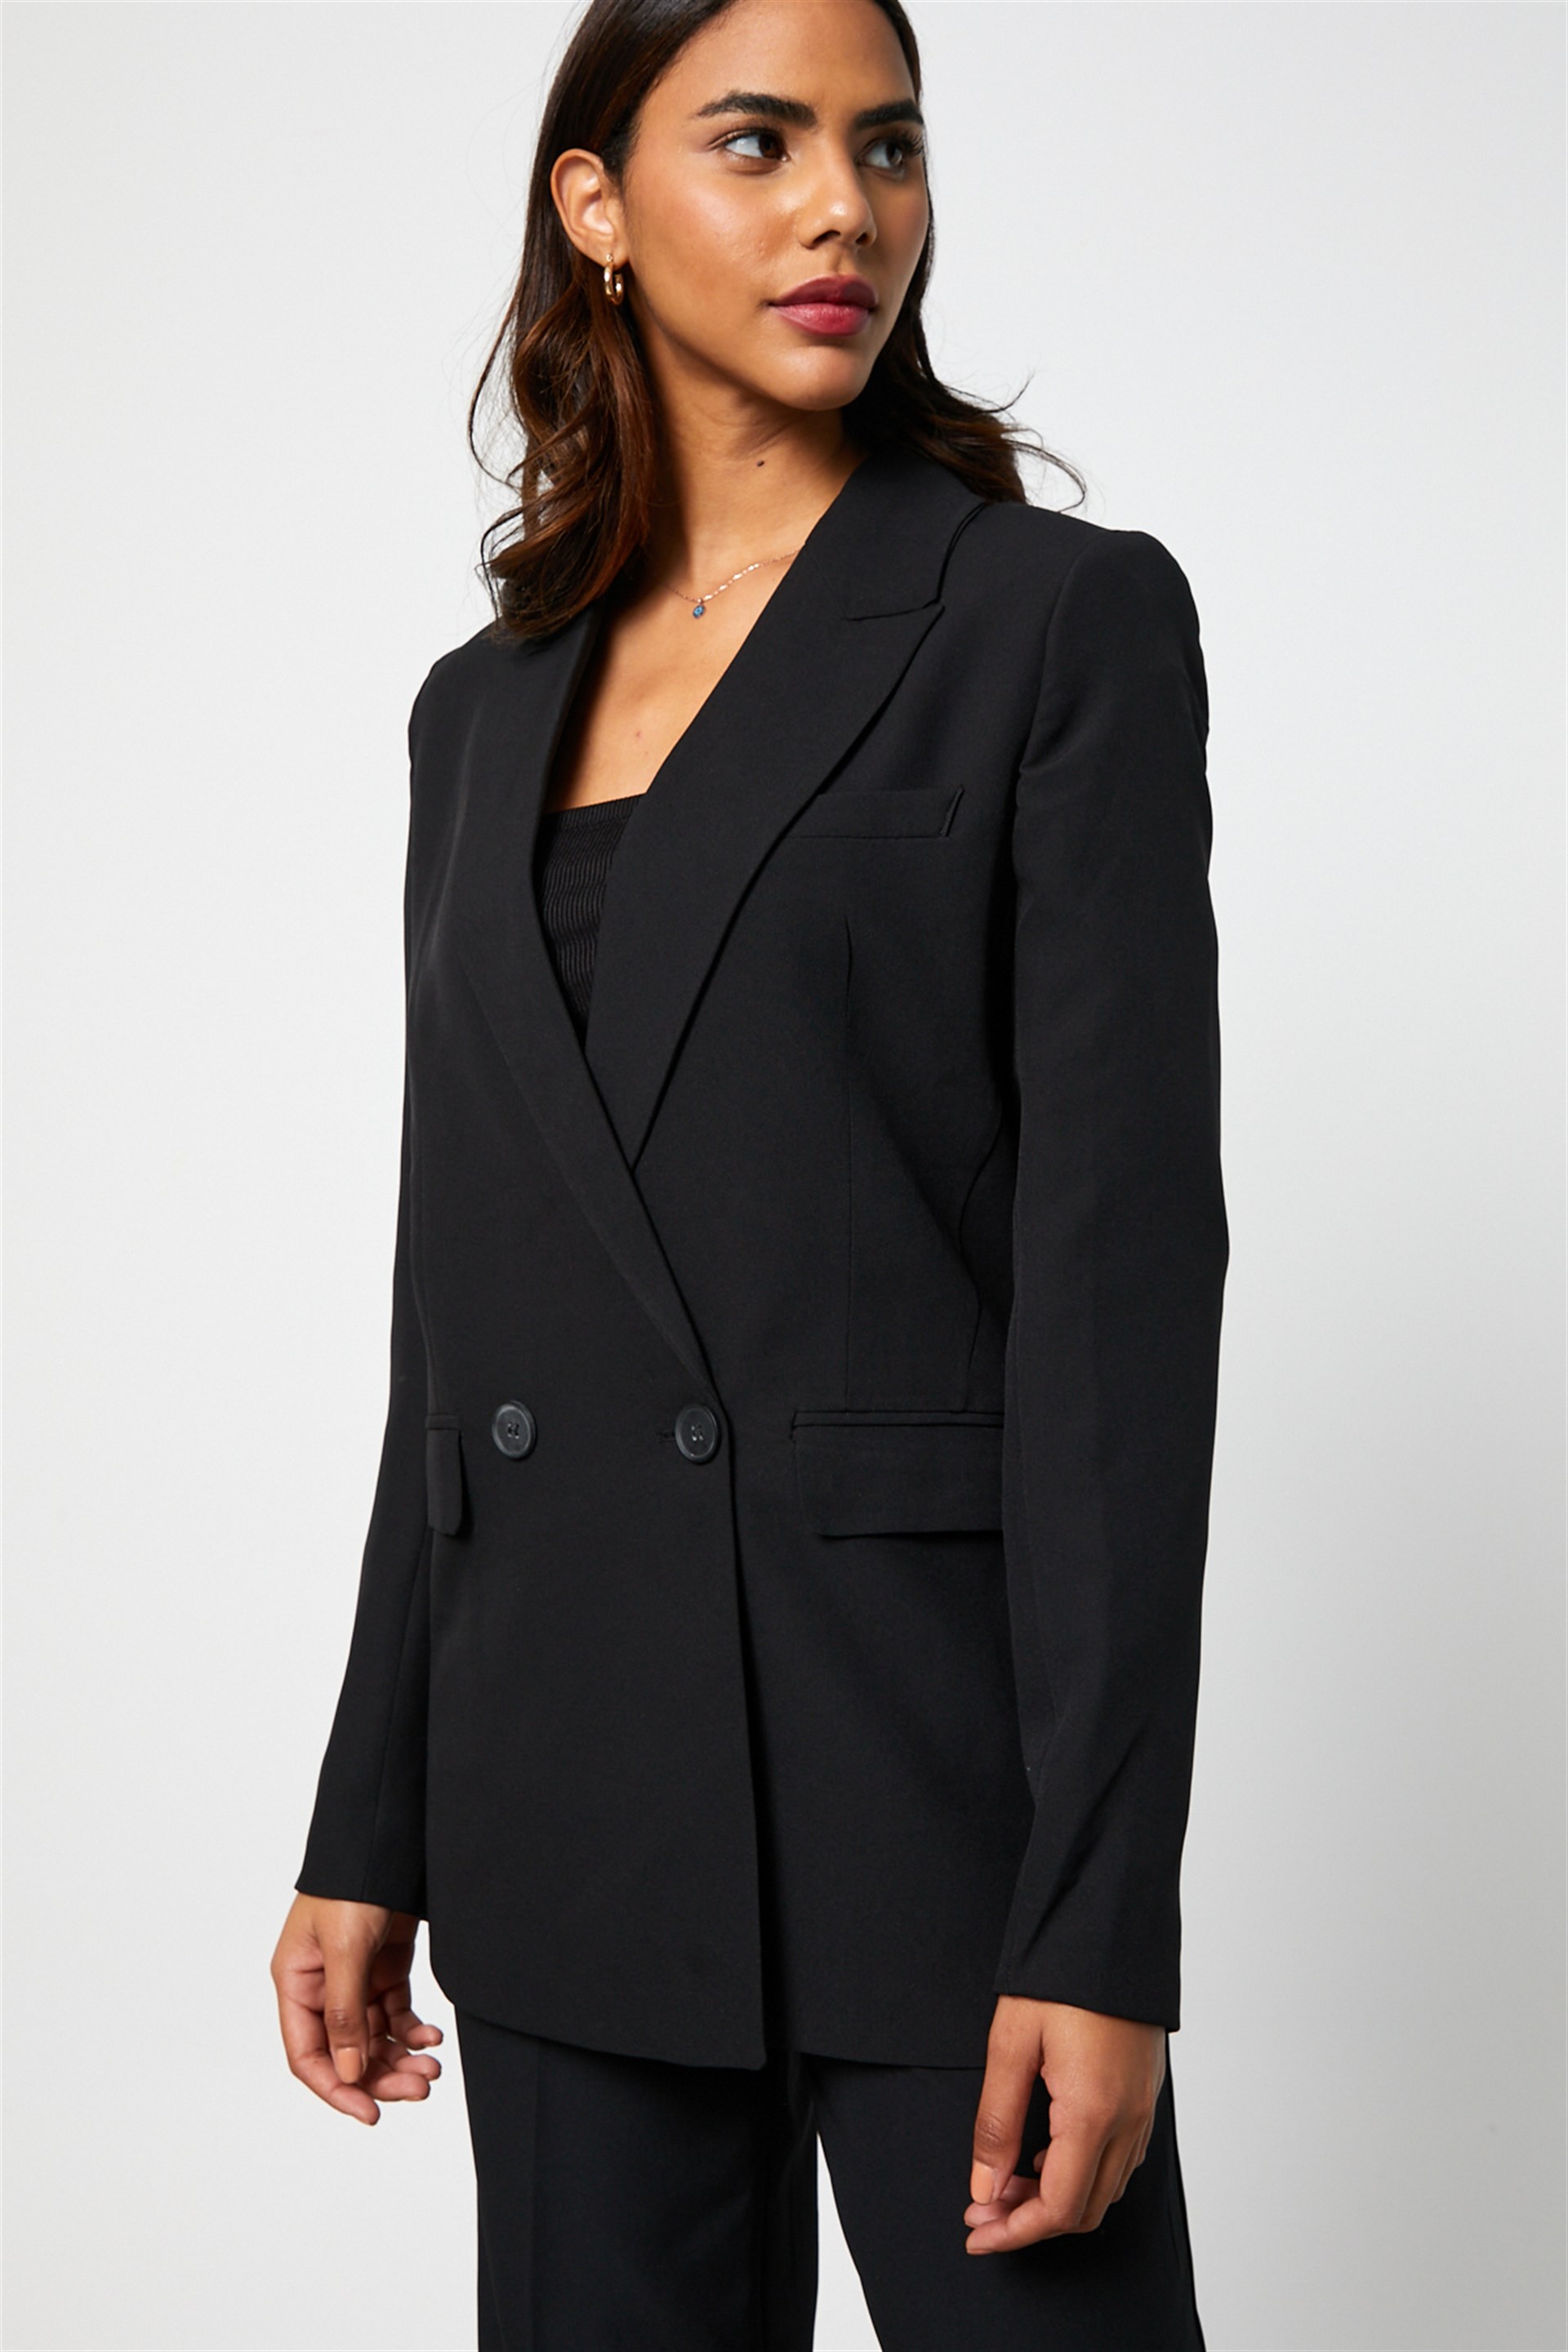 Kadın Blazer Ceket Palazzo Pantolon Takım